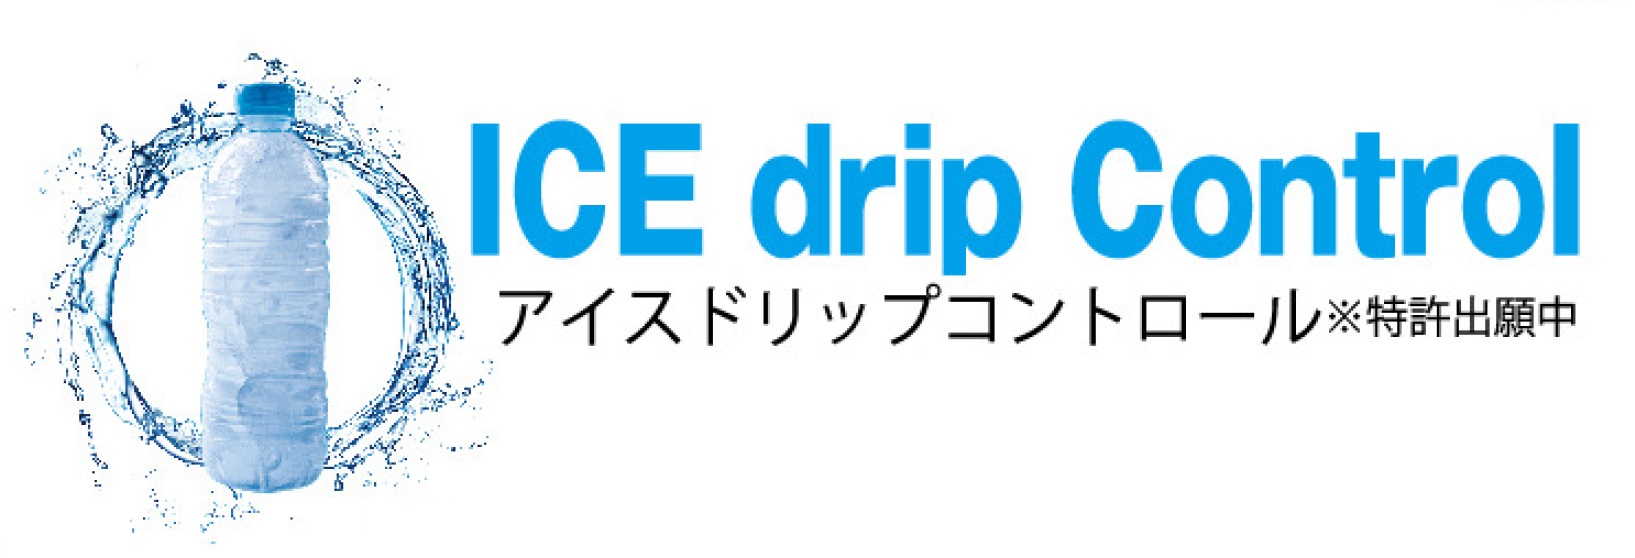 ICE drip Control